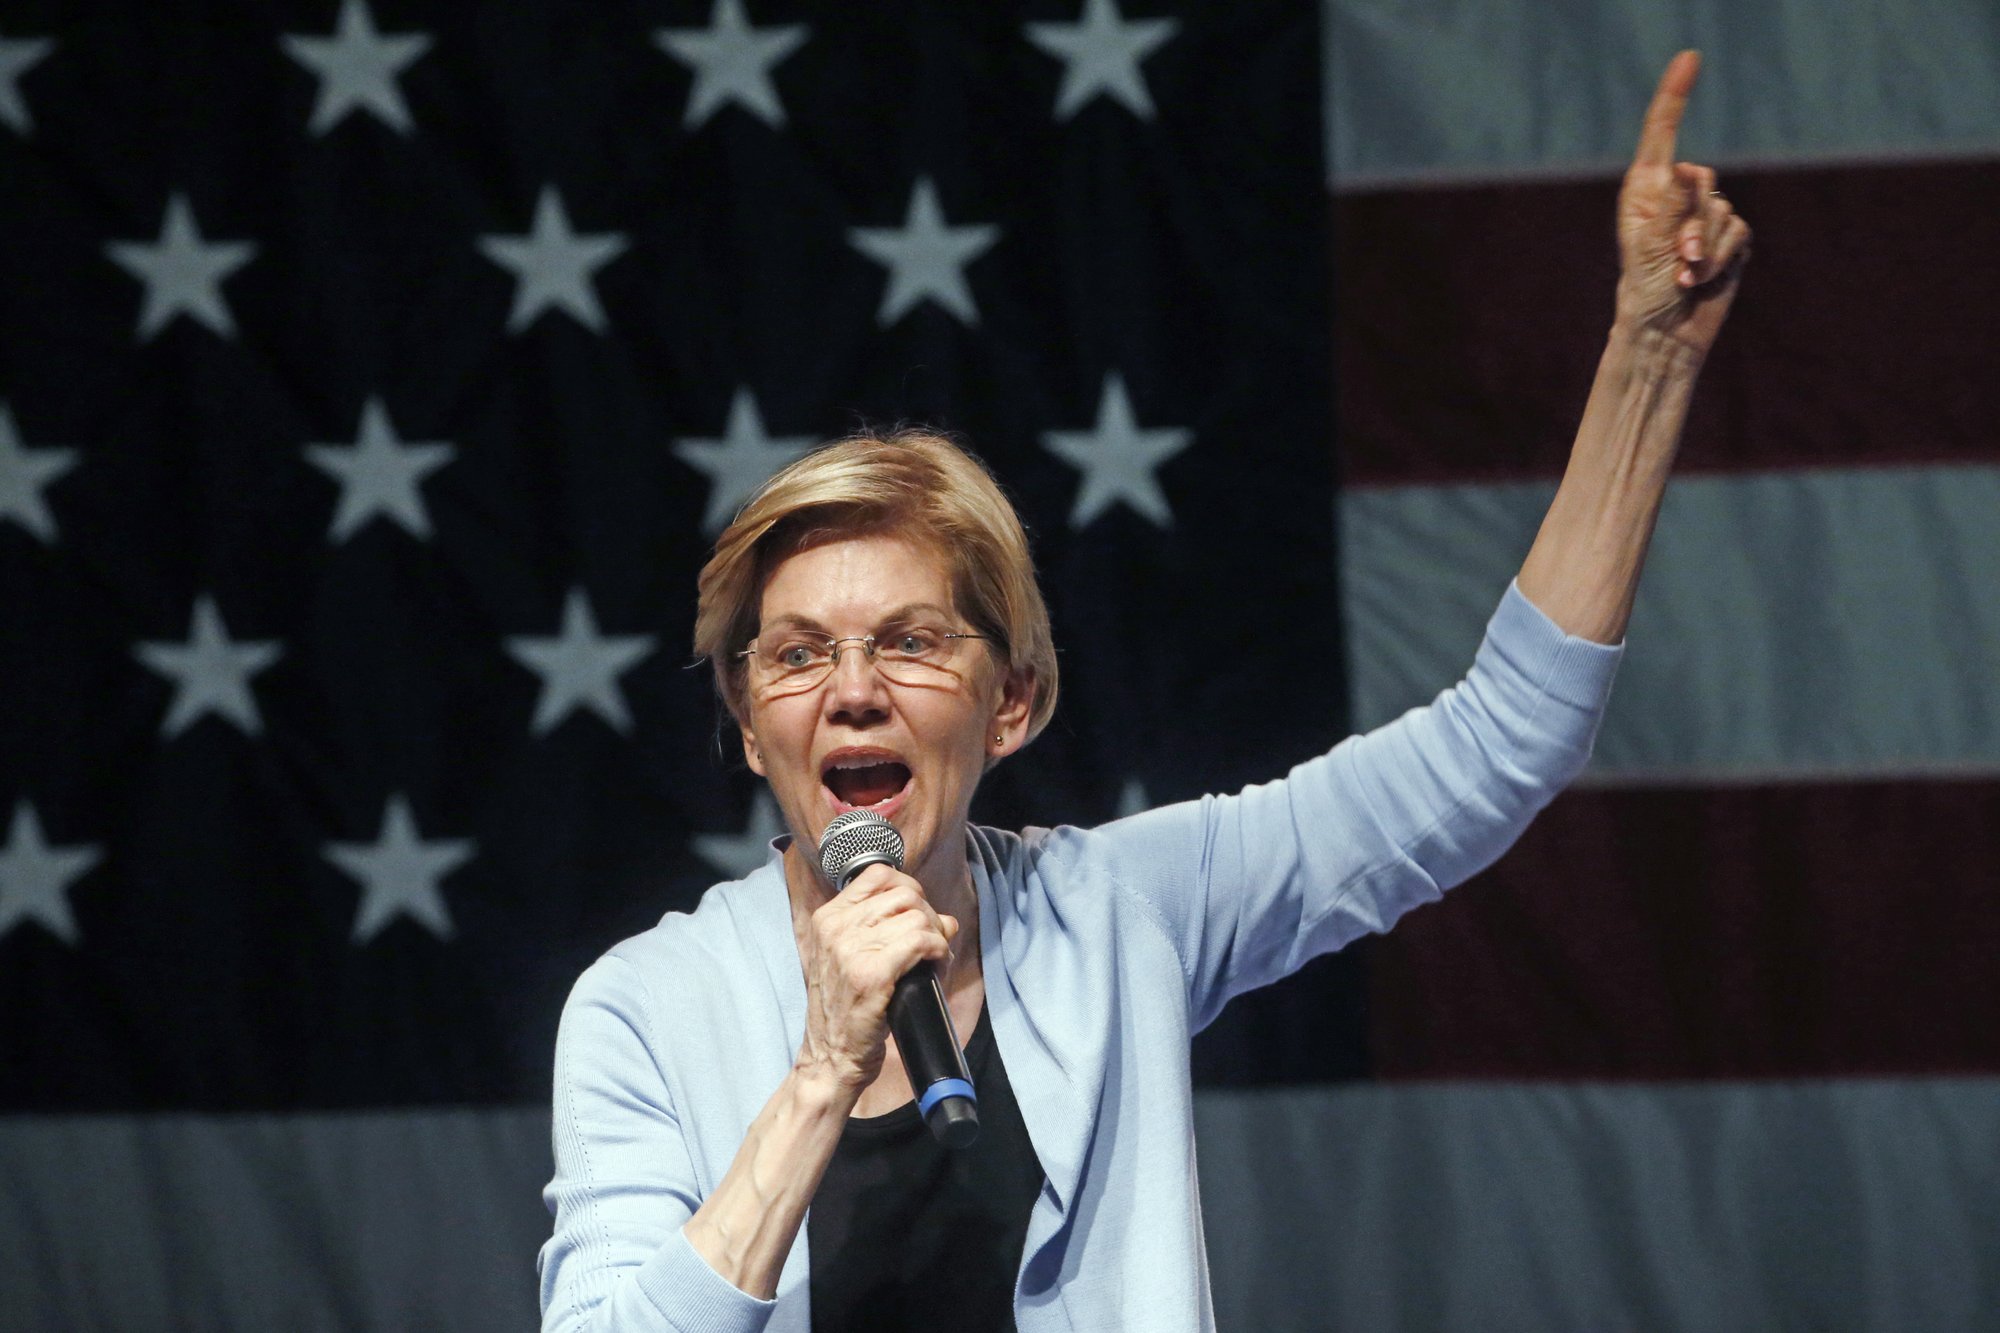 Democratic presidential candidate Sen. Elizabeth Warren, D-Mass., speaks during a campaign rally Wednesday, April 17, 2019, in Salt Lake City. (AP Photo/Rick Bowmer)